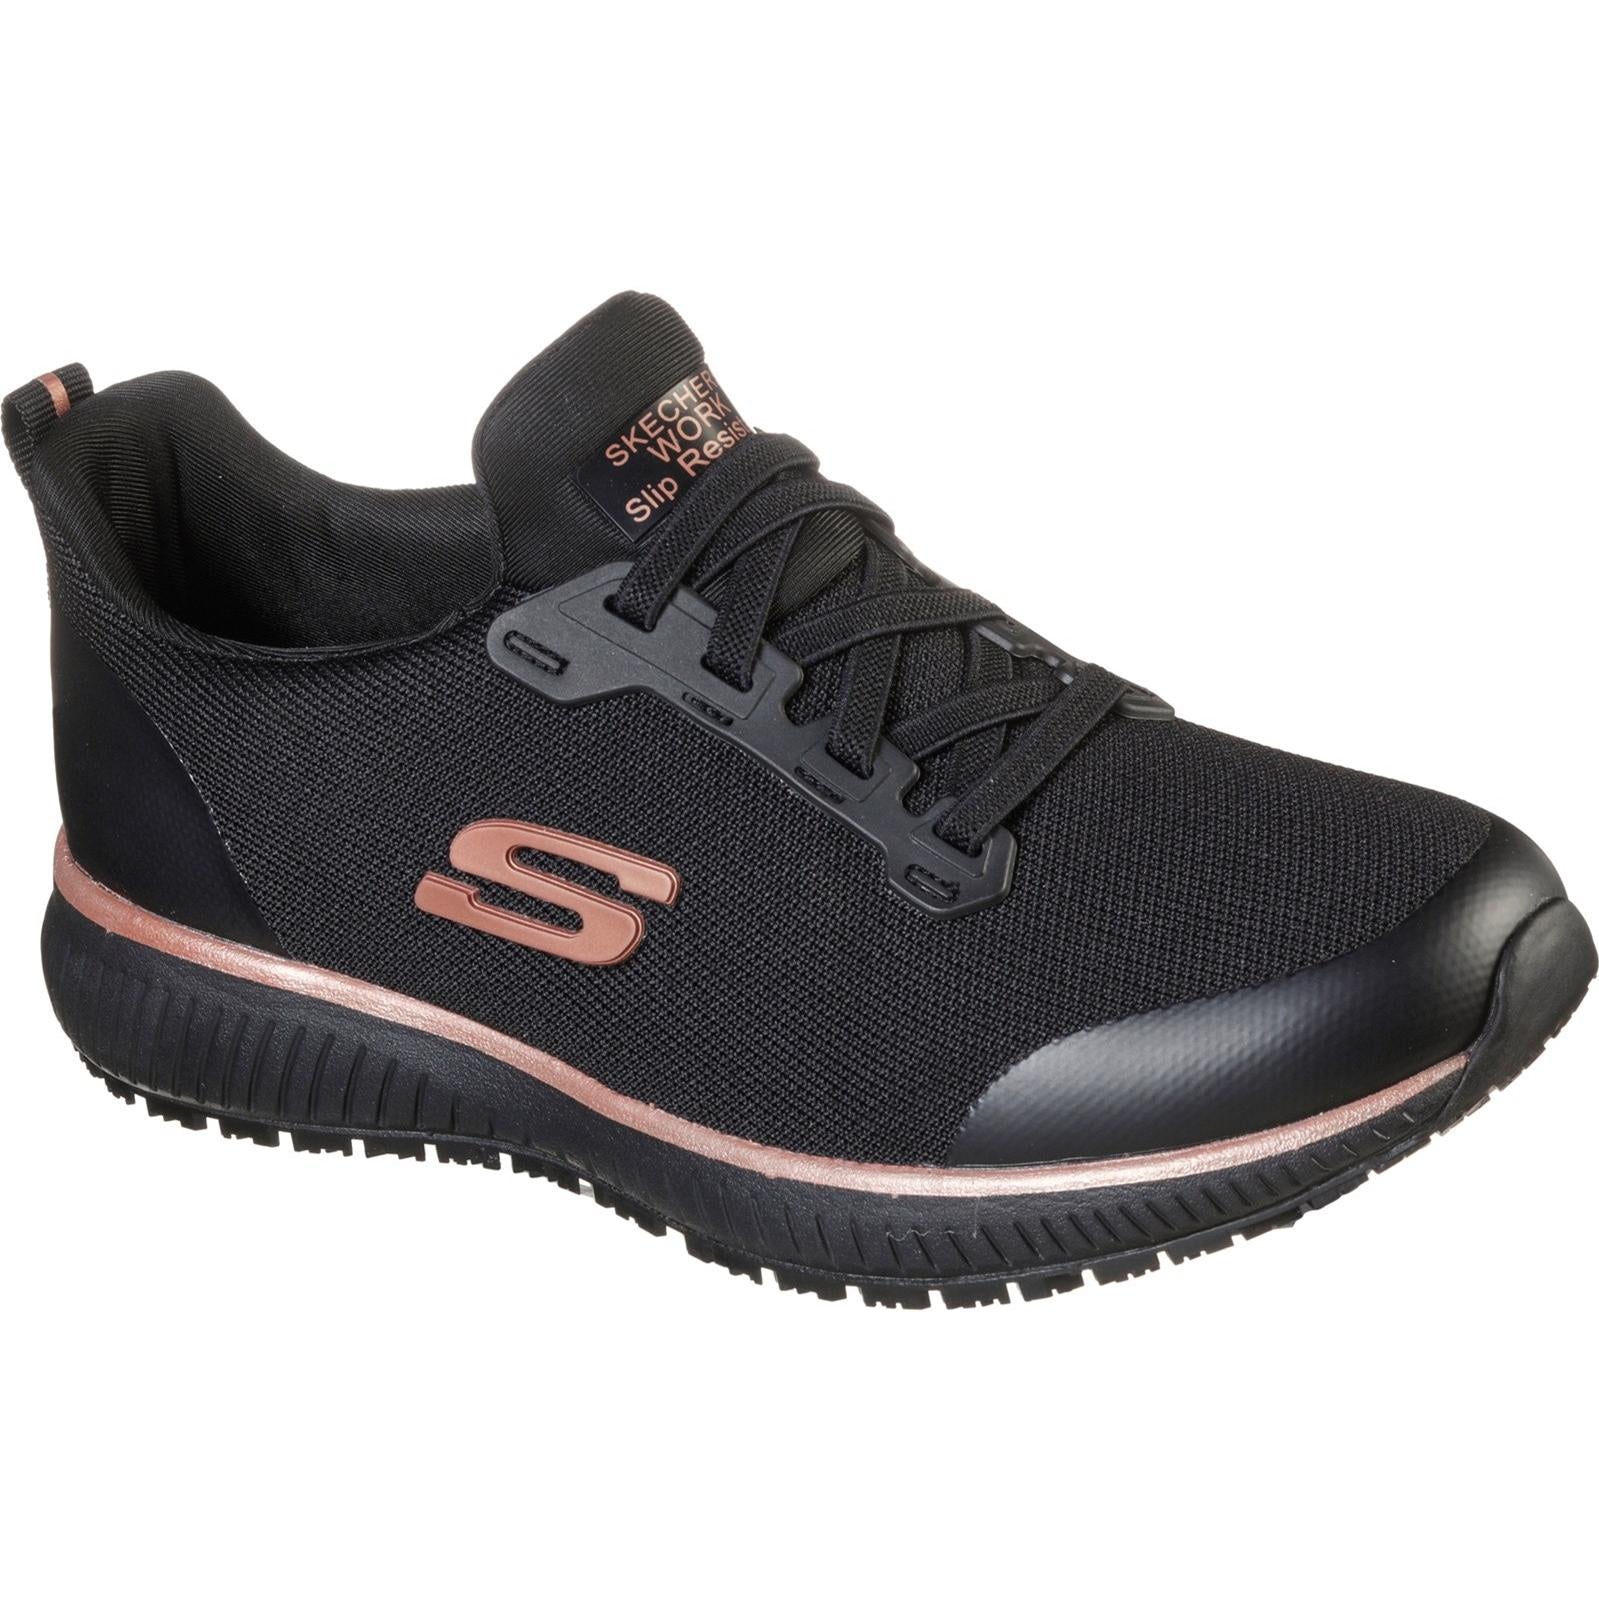 Skechers Squad SR Occupational Shoe